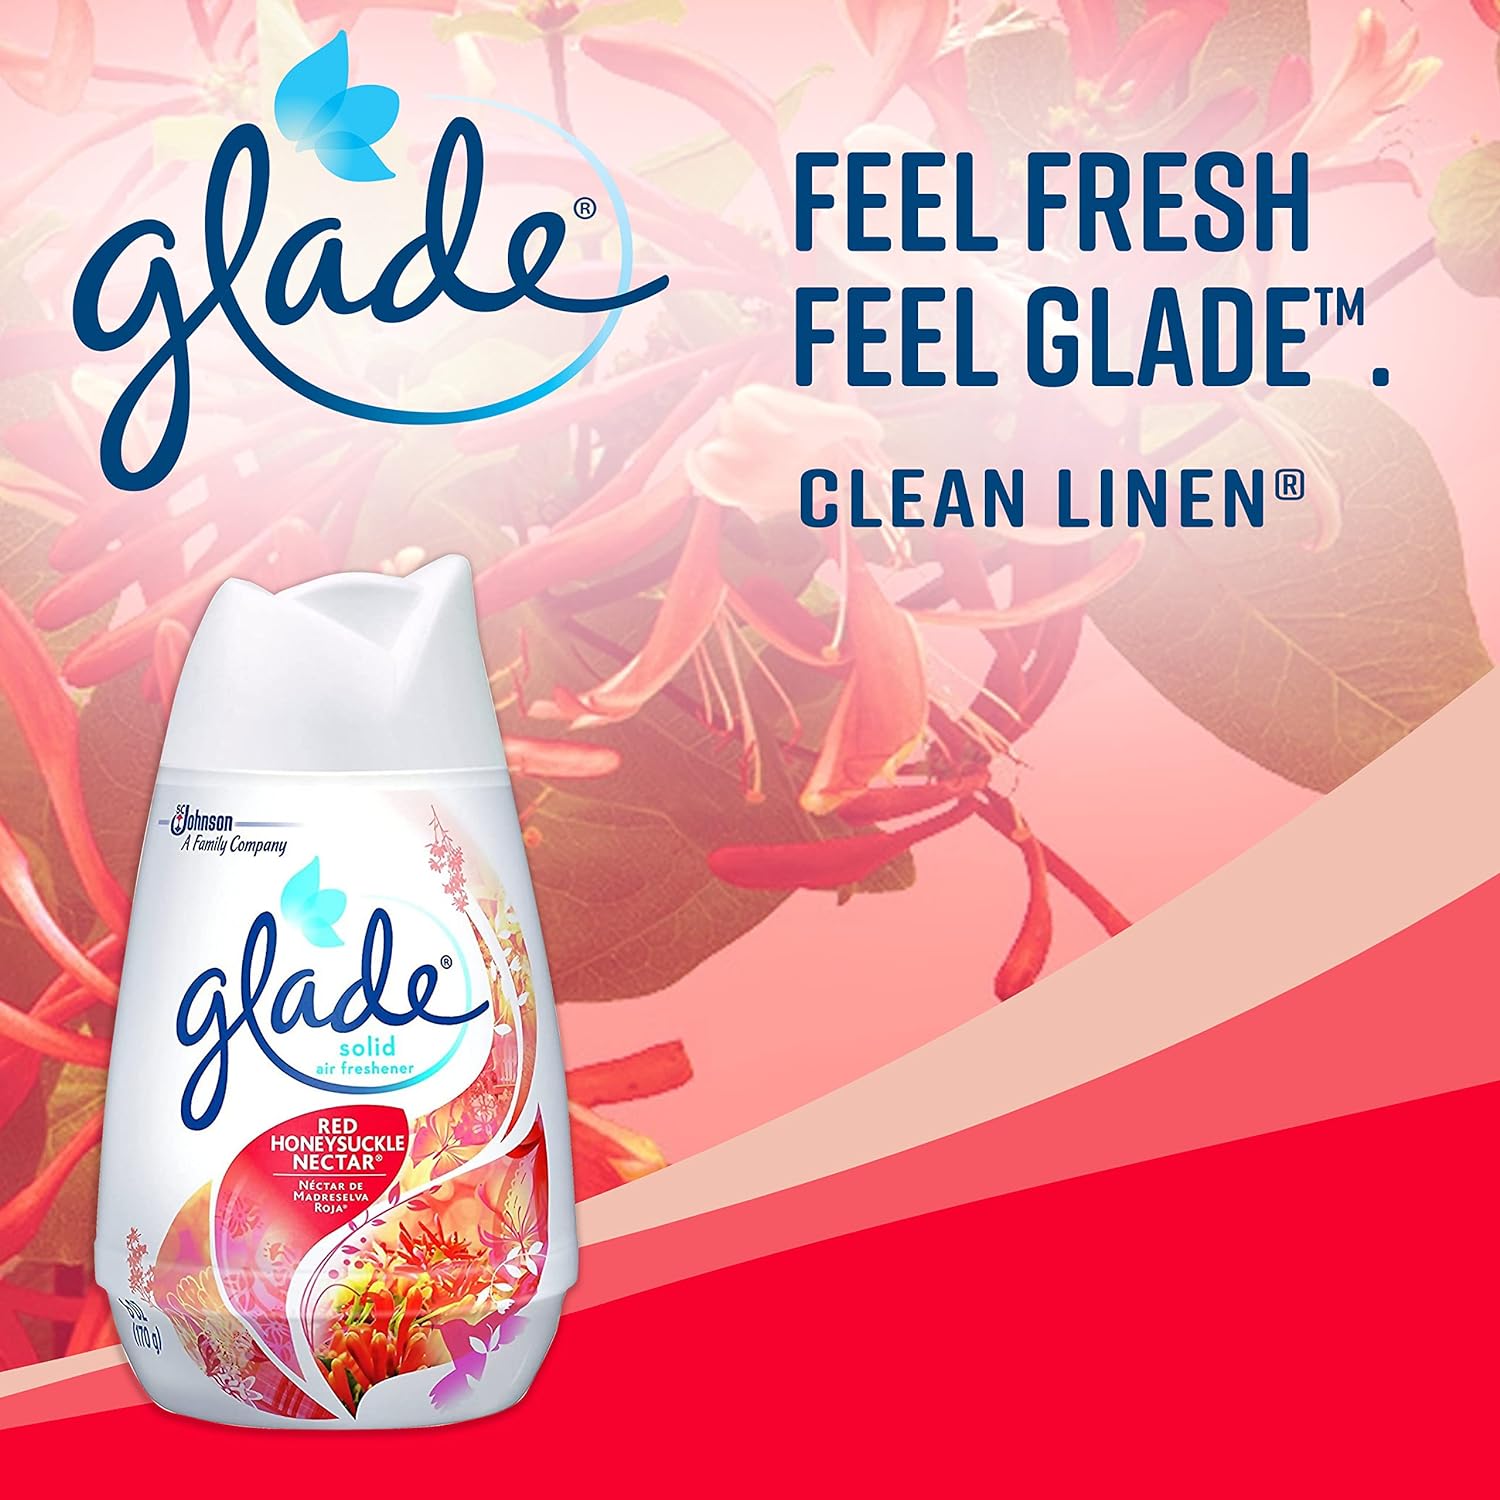 Glade Solid Air Freshener, Honeysuckle Nectar, (6.0 Ounce Pack of 2) : Health & Household